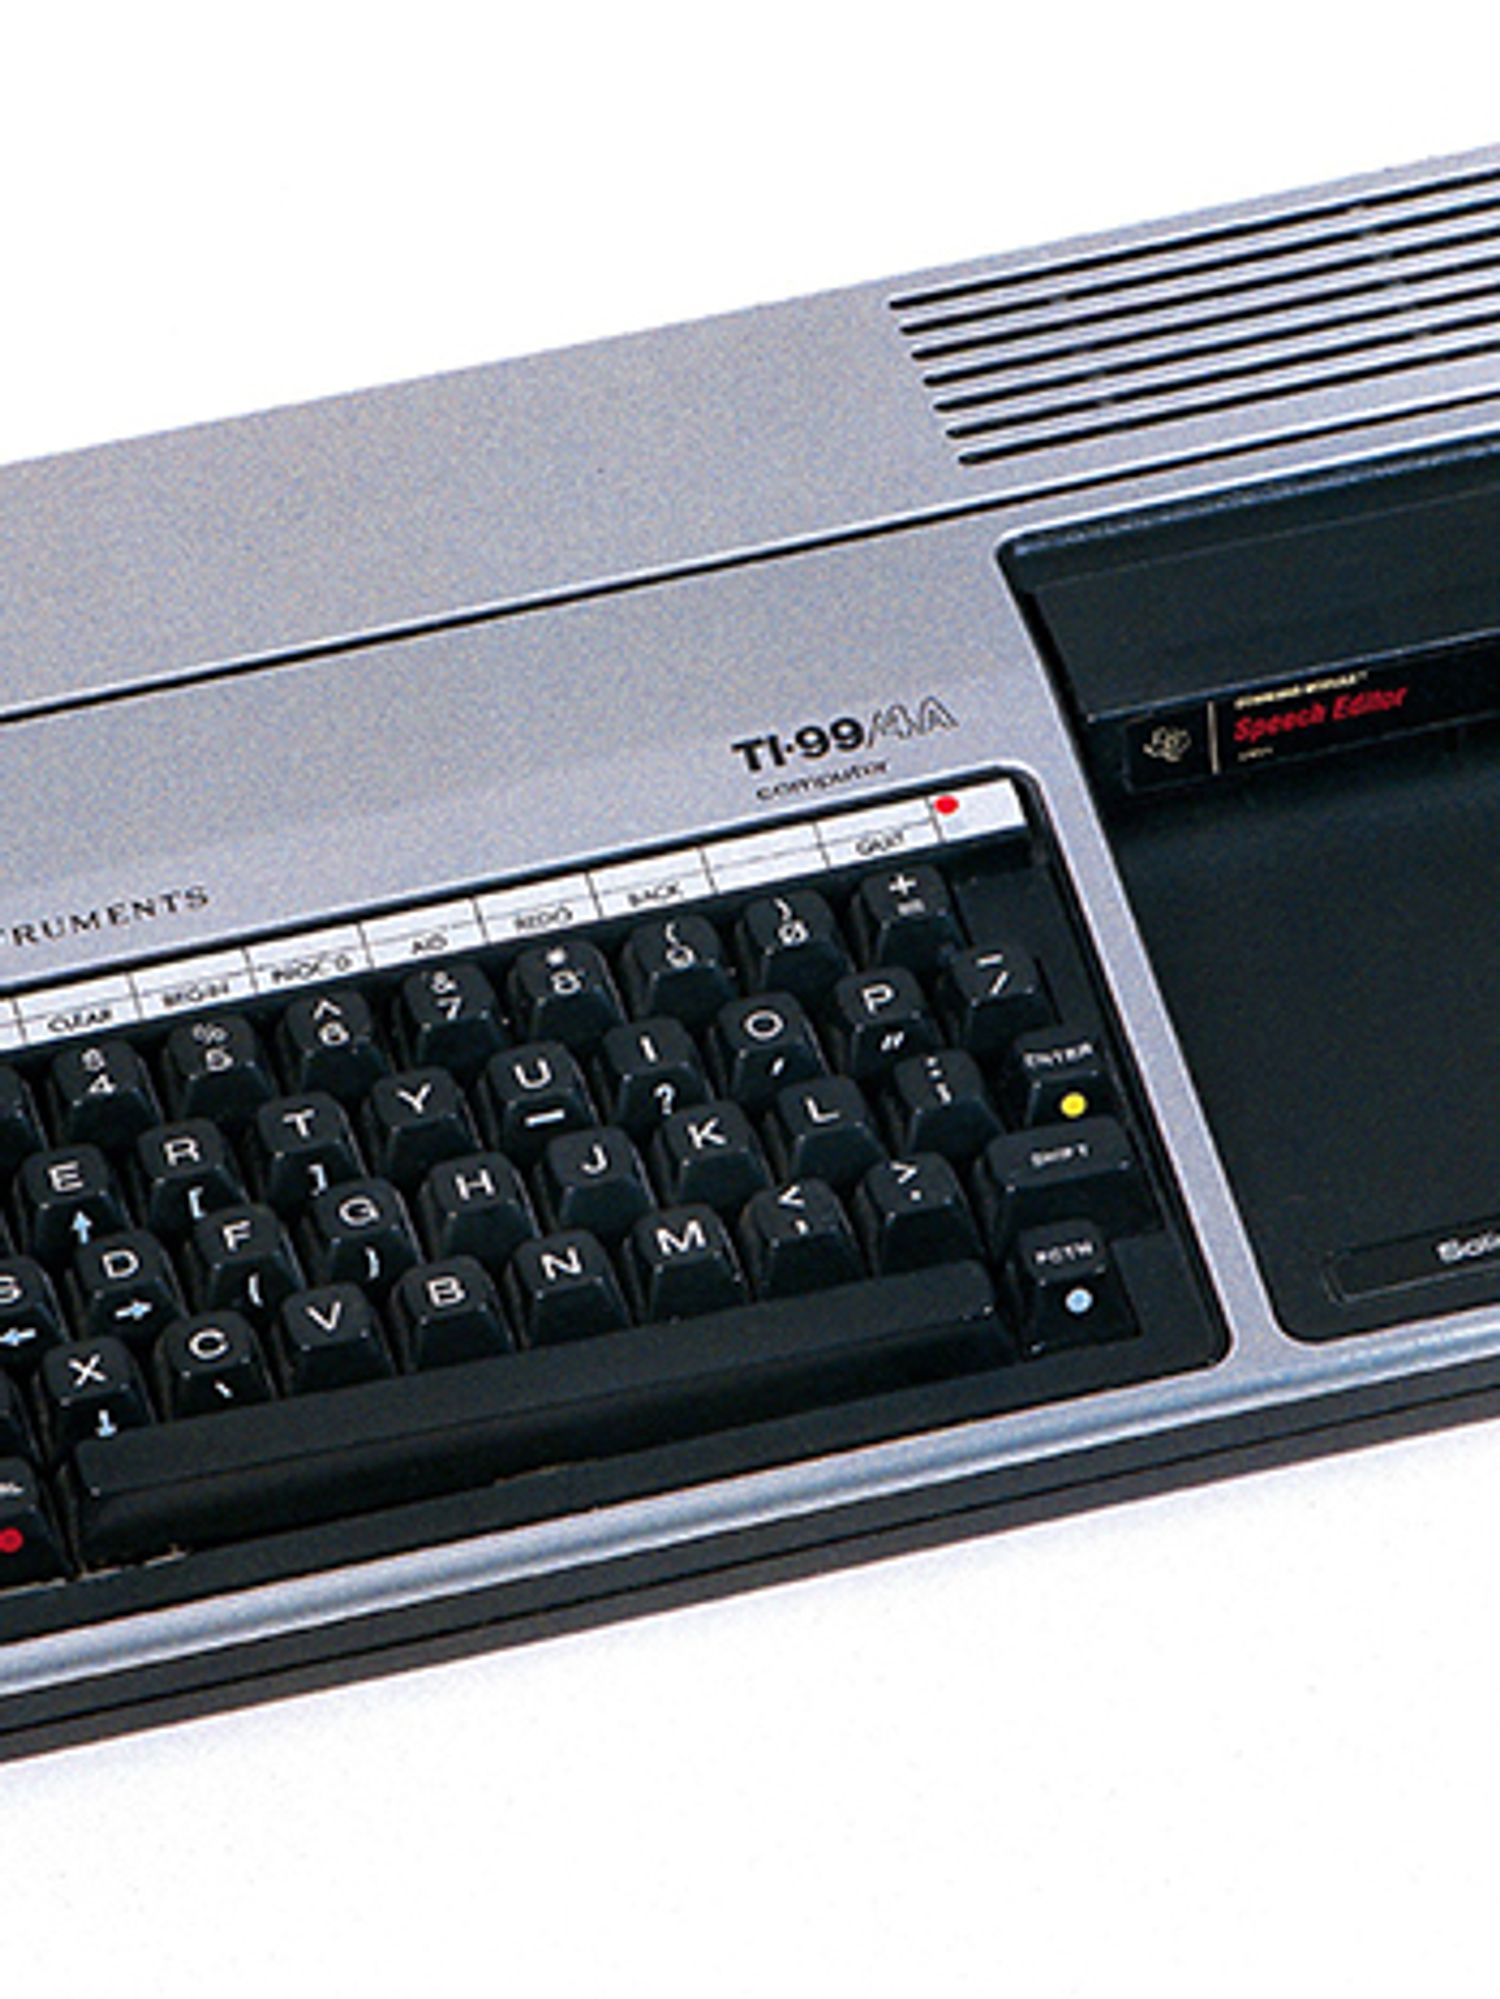 The Texas Instruments 99 4 World S First 16 Bit Home Computer Ieee Spectrum